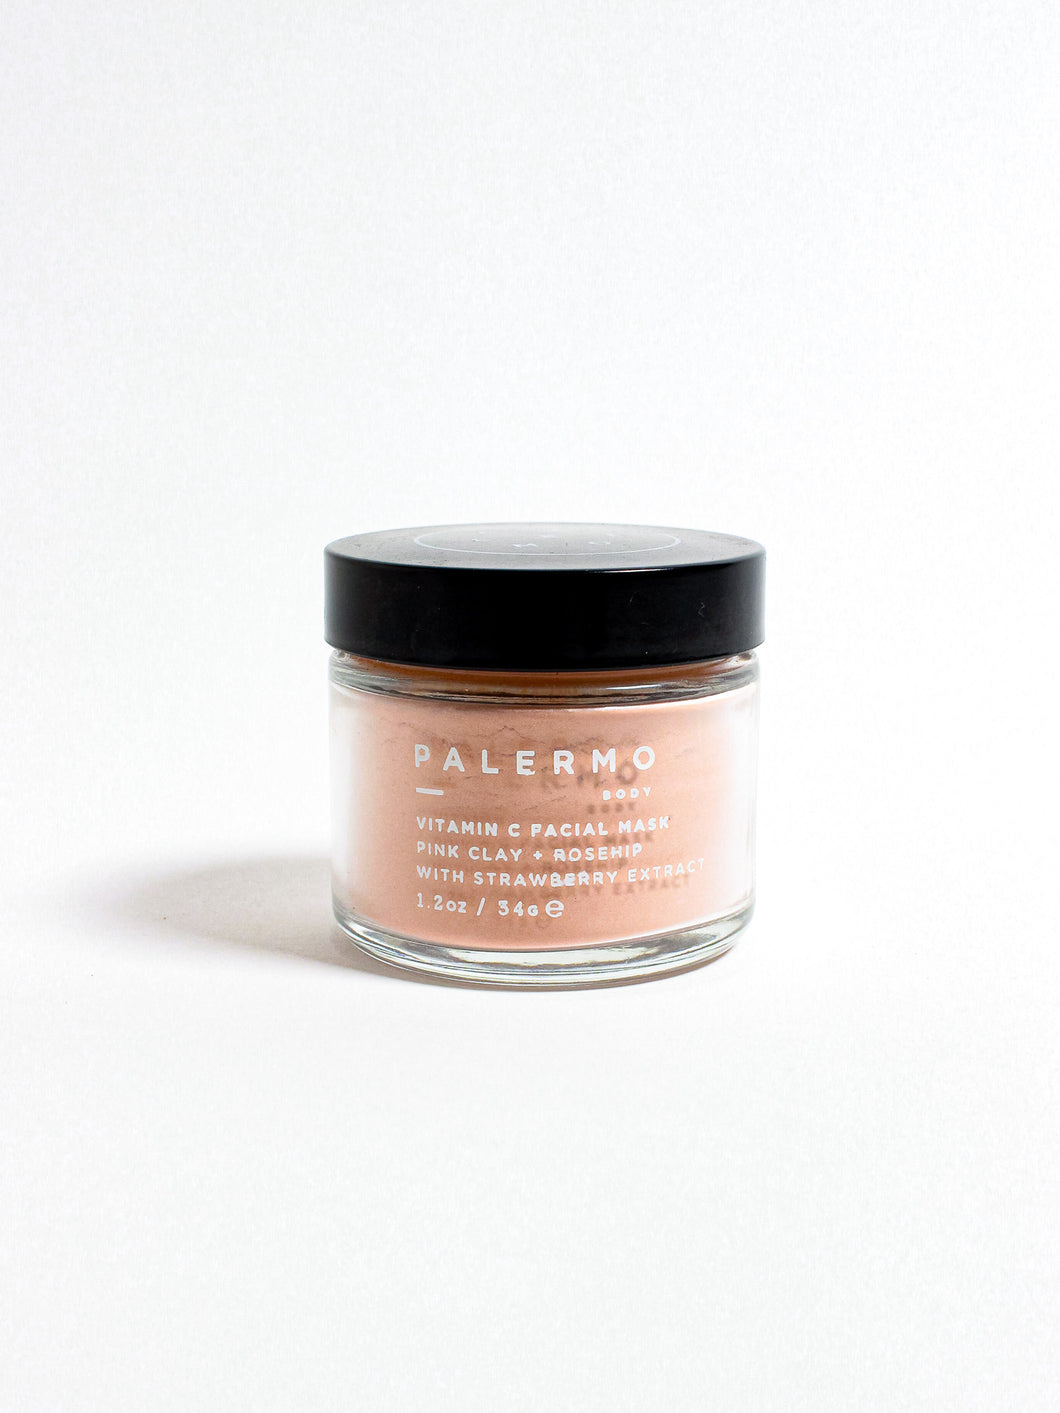 Vitamin C Facial Mask - Pink Clay + Rosehip - Palermo Body - Berte